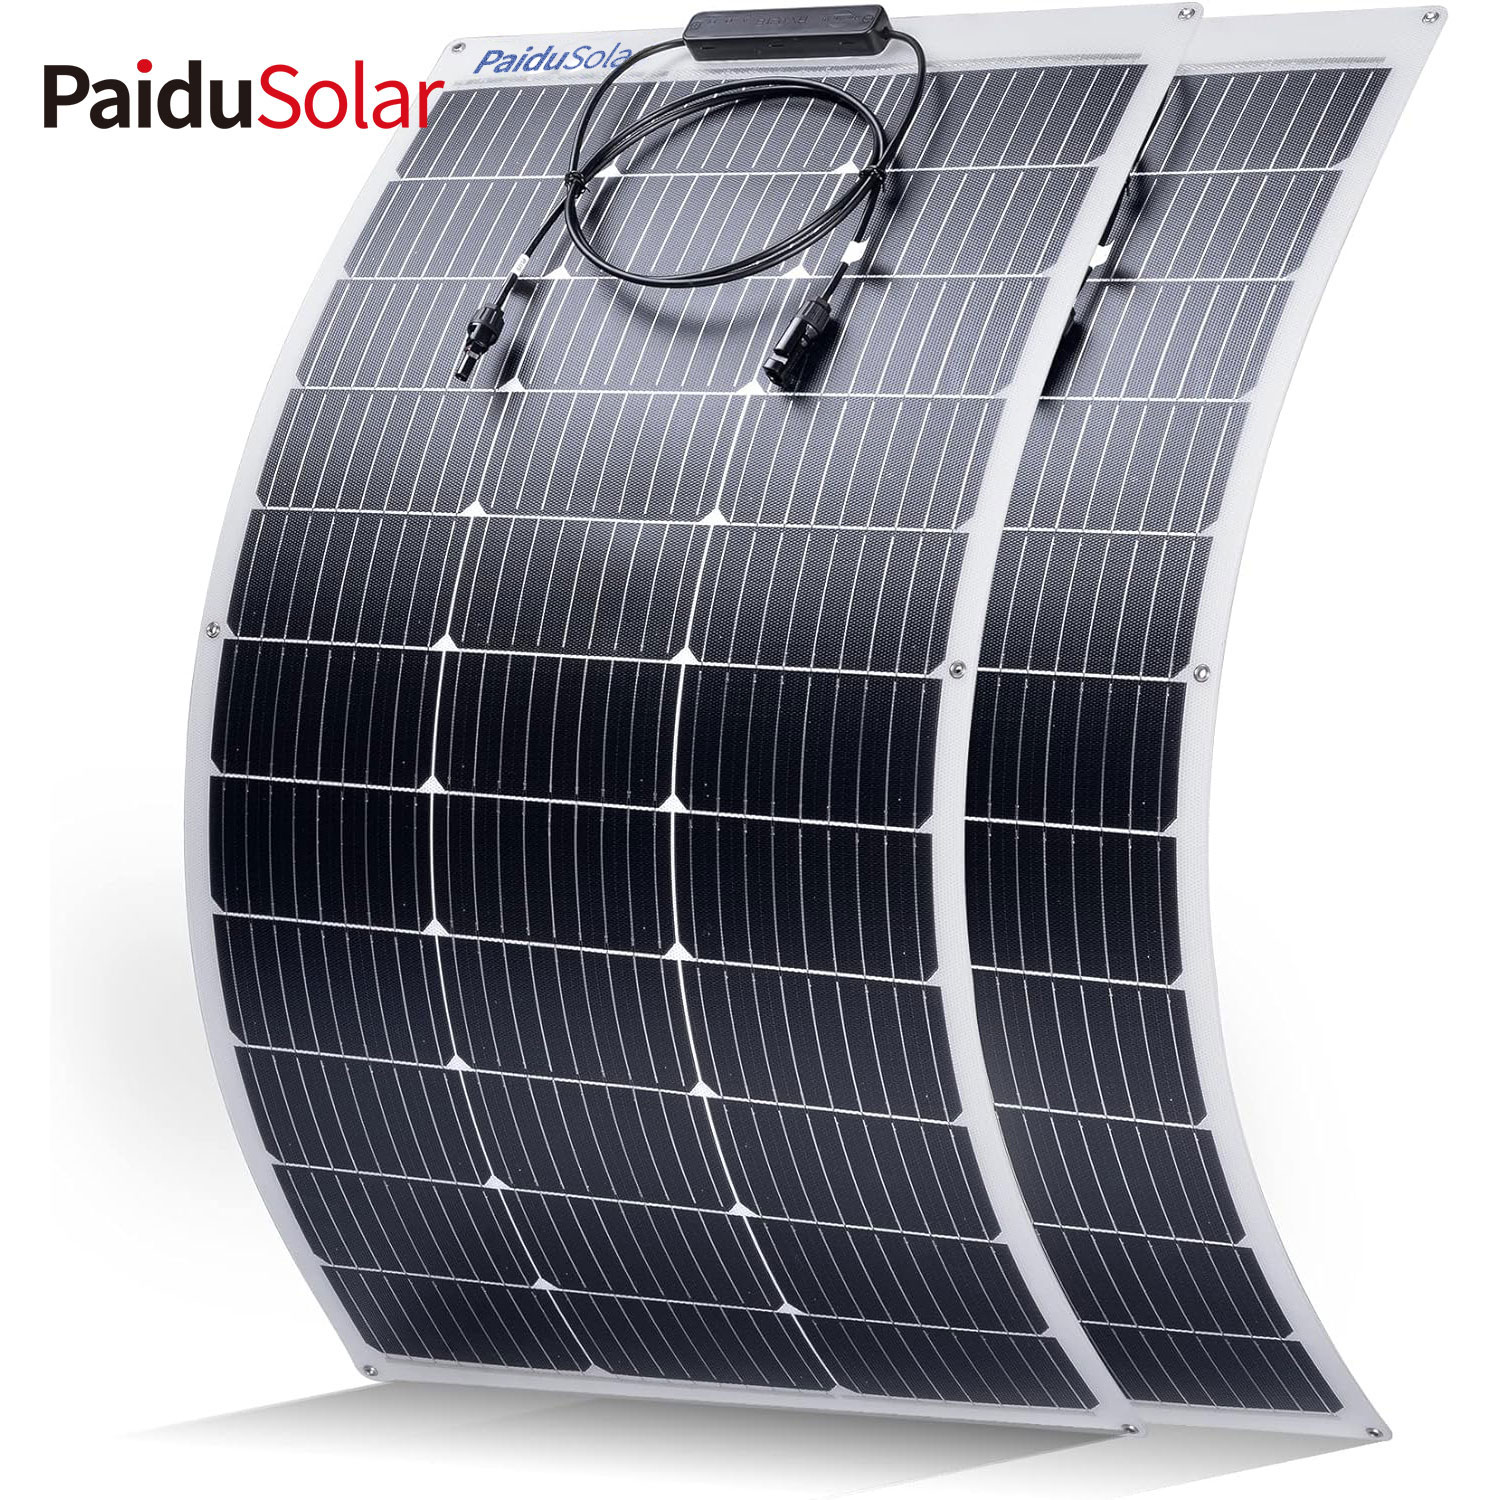 Painel solar semiflexível PaiduSolar 100W 12V Volt para trailer marinho, barco, cabine, van, carro